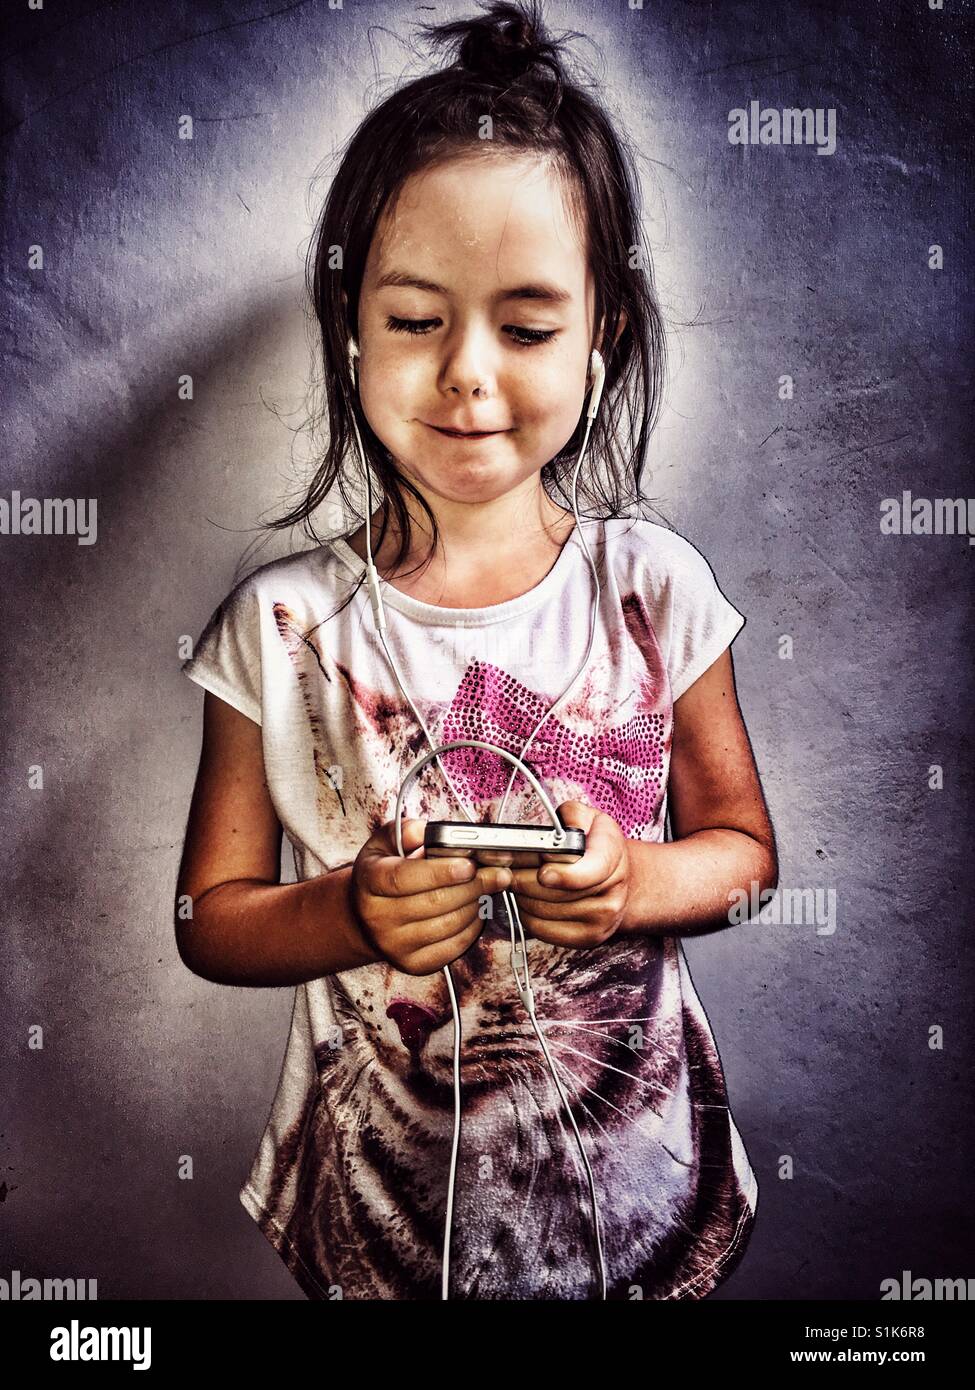 Child using a smartphone Stock Photo